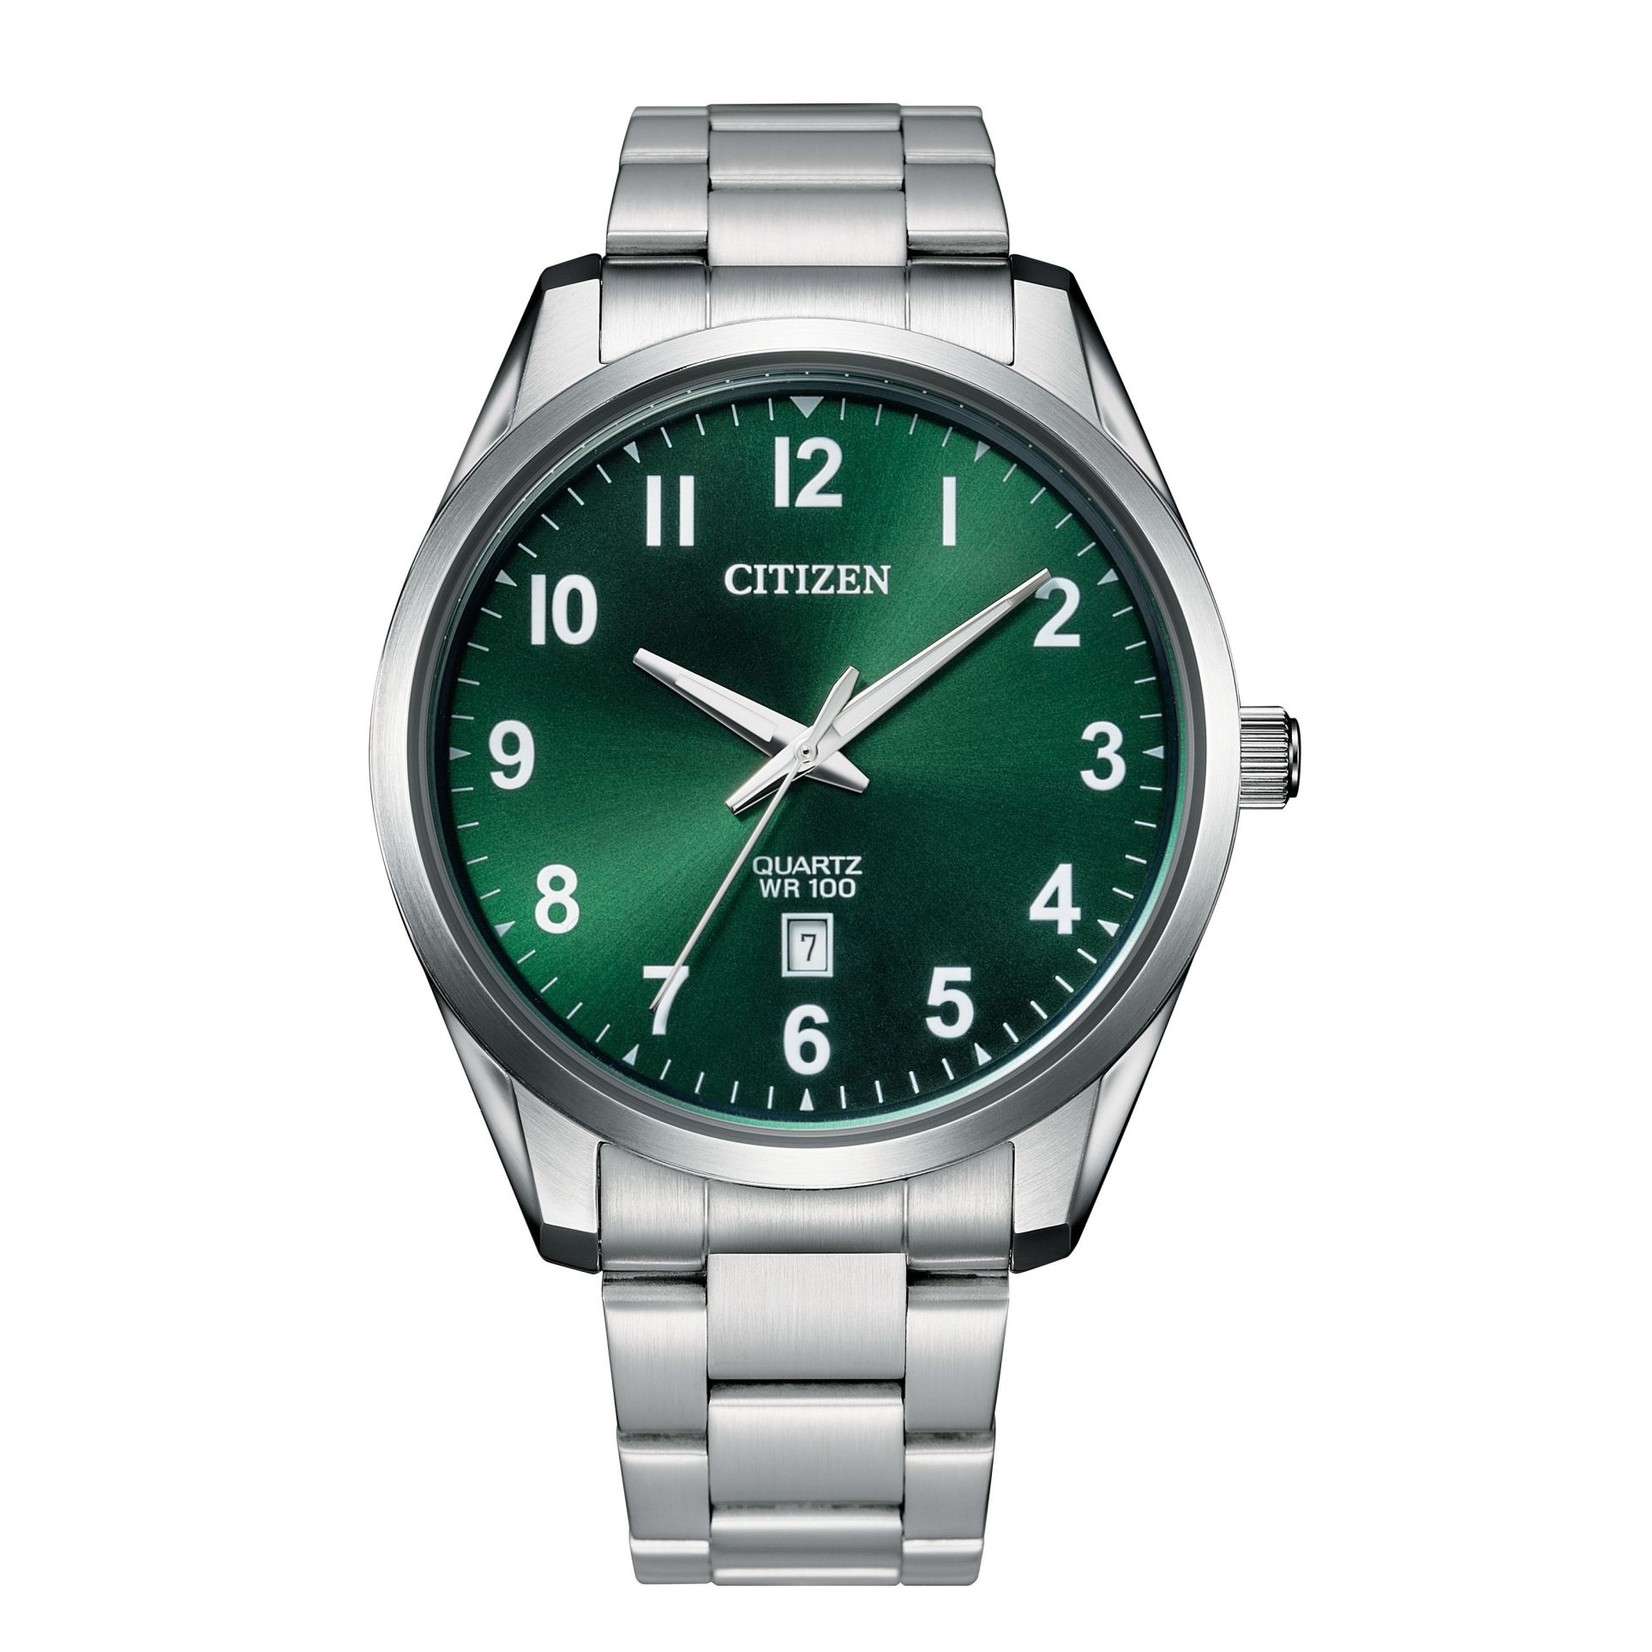 CITIZEN WATCH COMPANY Men's Citizen Quartz Green Dial w/ Date & Full Number Bracelet Watch